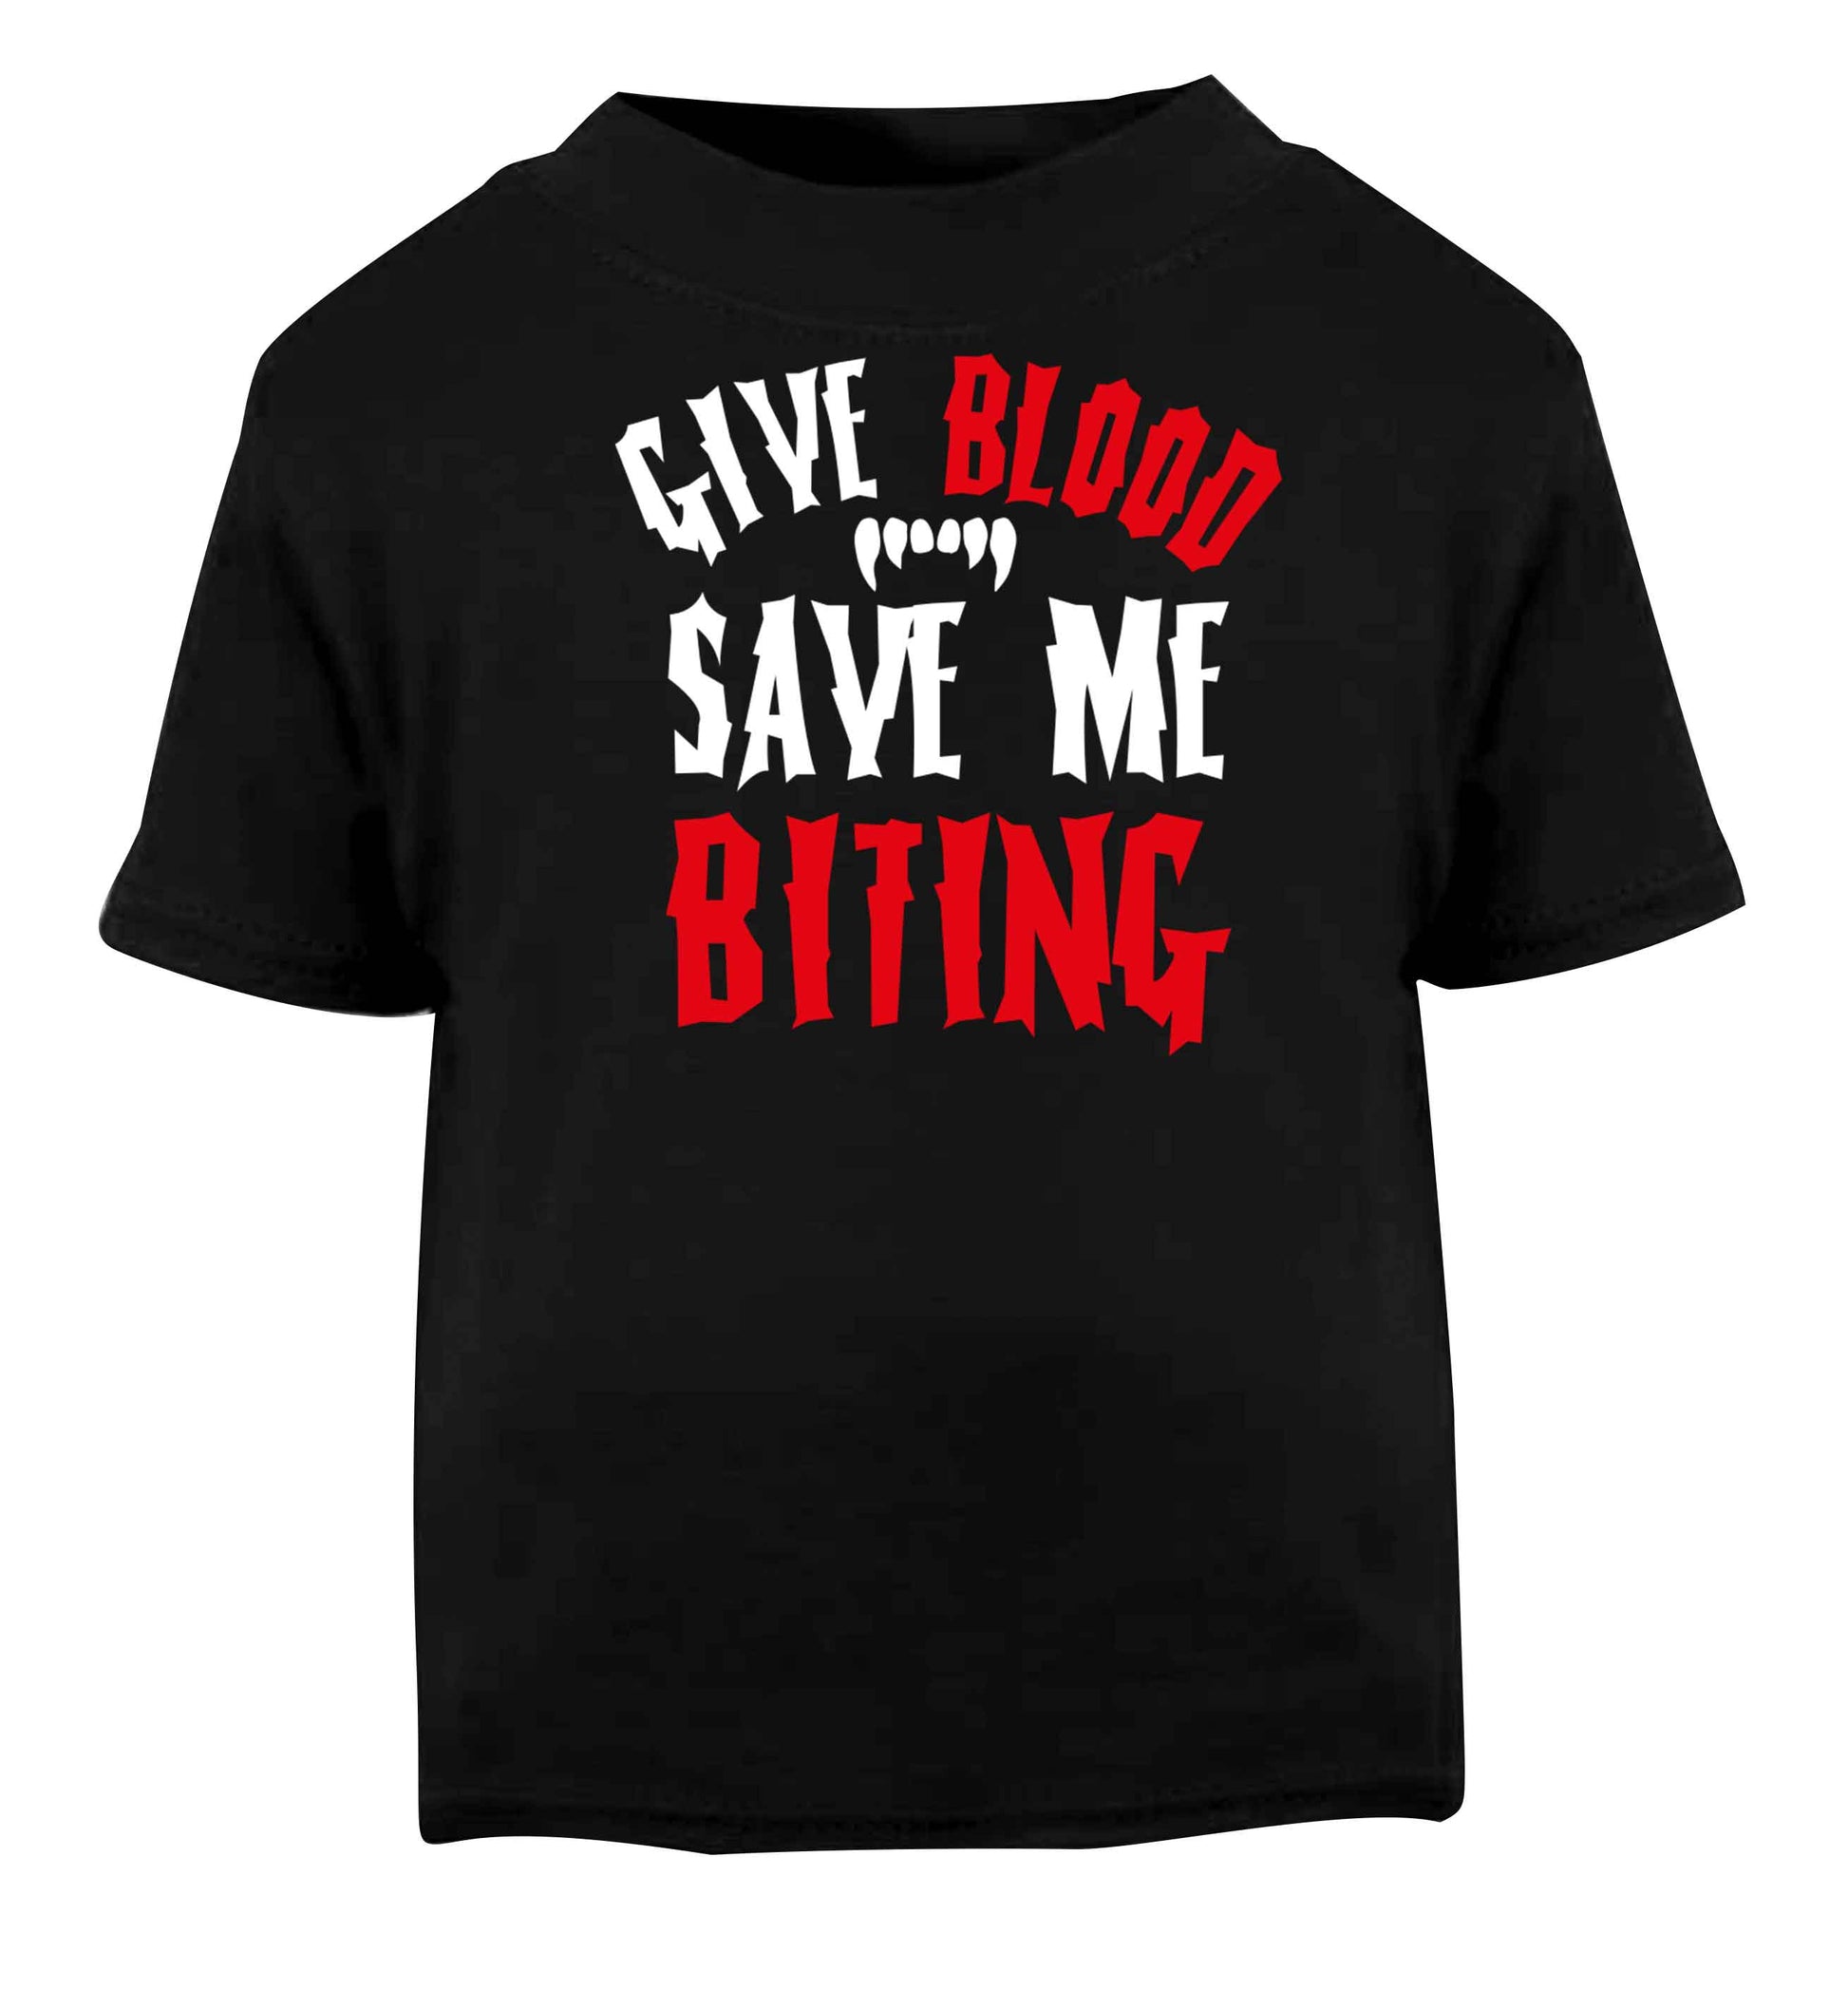 Give blood save me biting Black baby toddler Tshirt 2 years